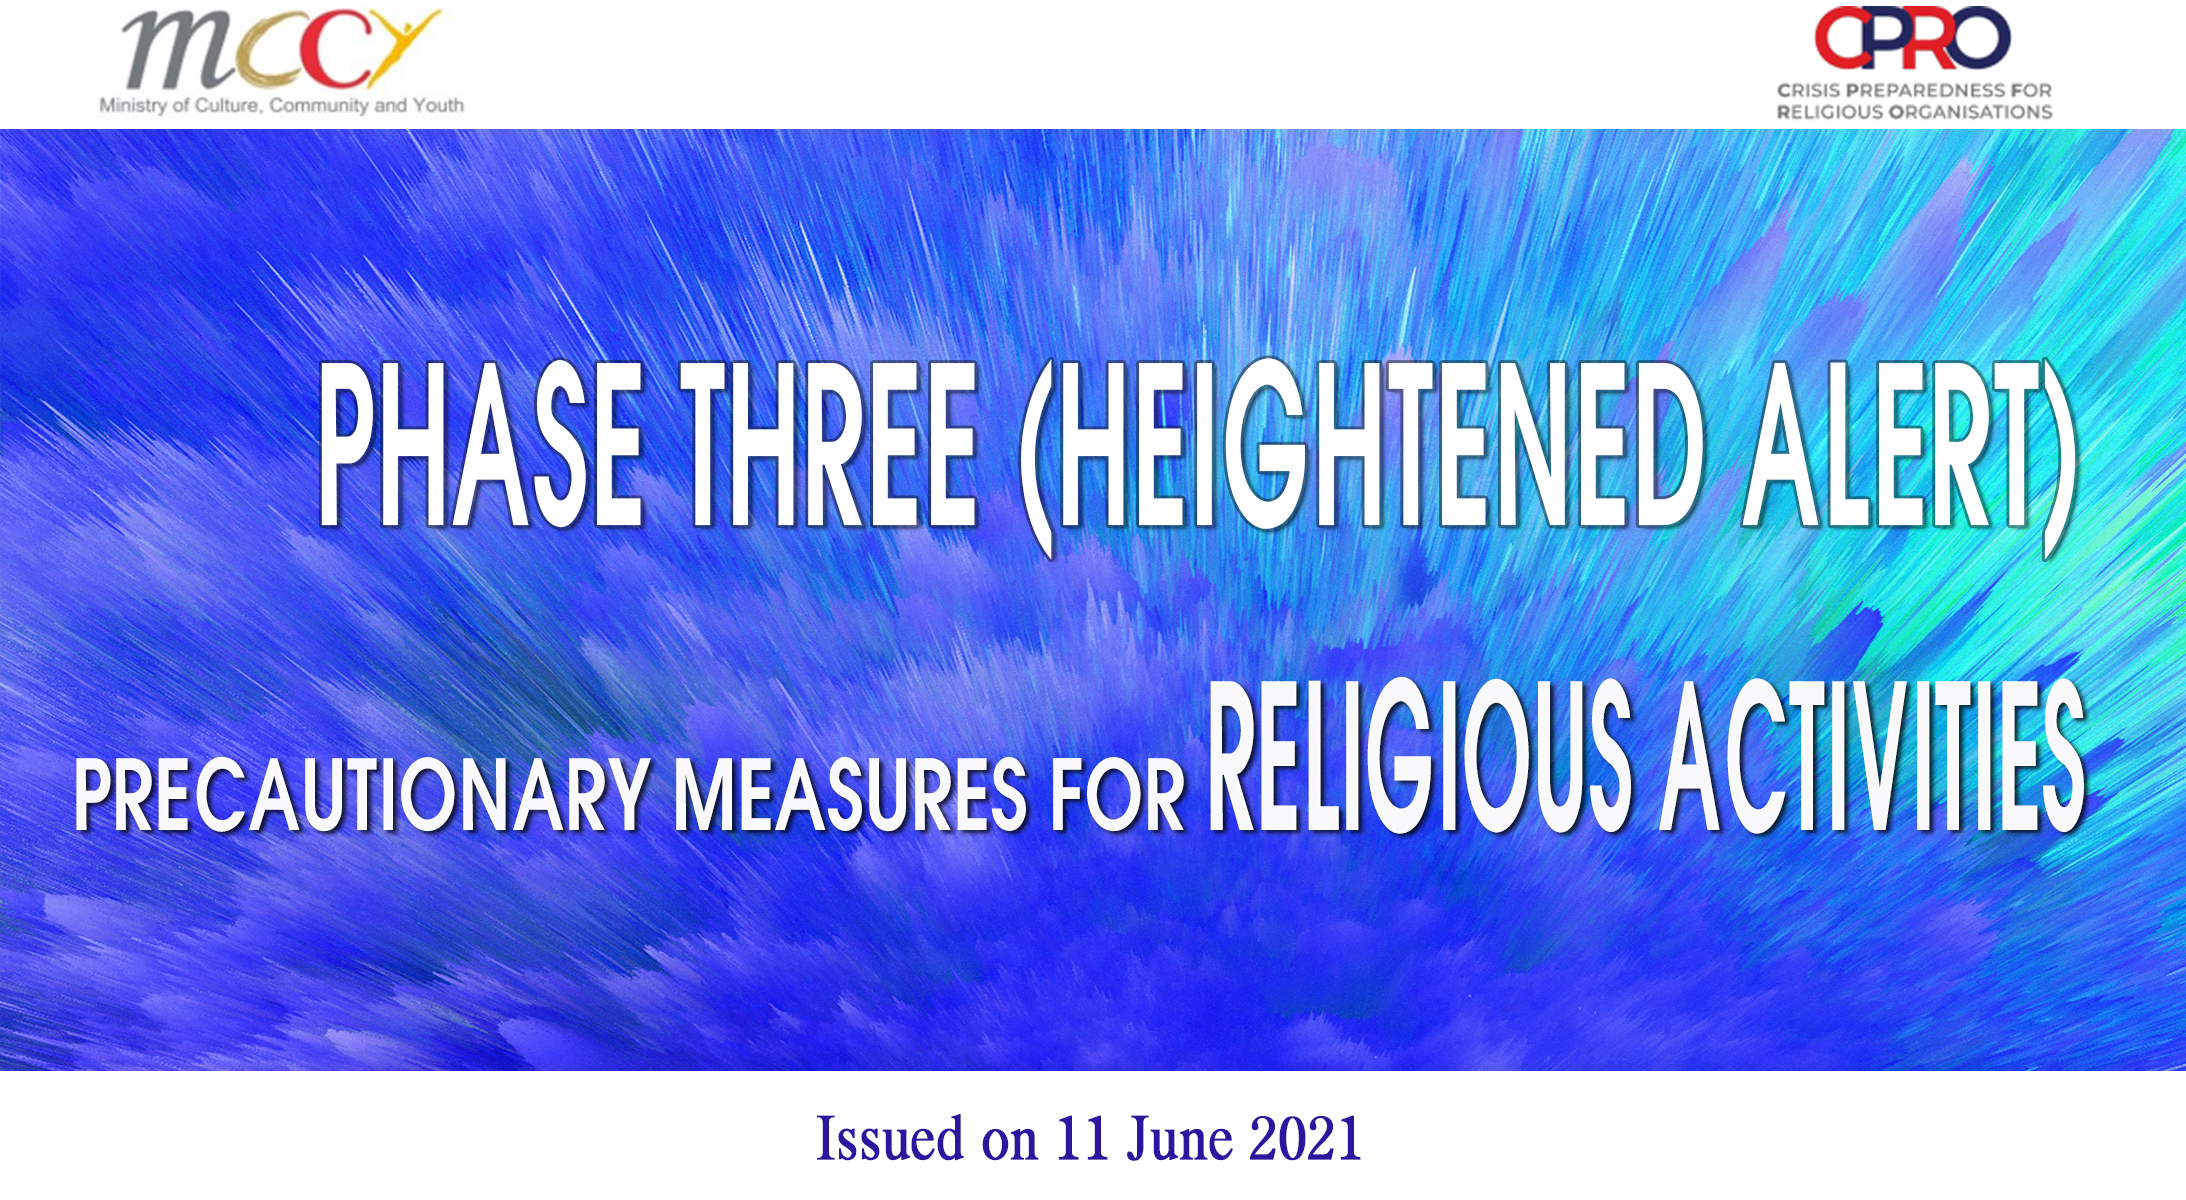 PHASE THREE (HEIGHTENED ALERT) PRECAUTIONARY MEASURES FOR RELIGIOUS ACTIVITIES